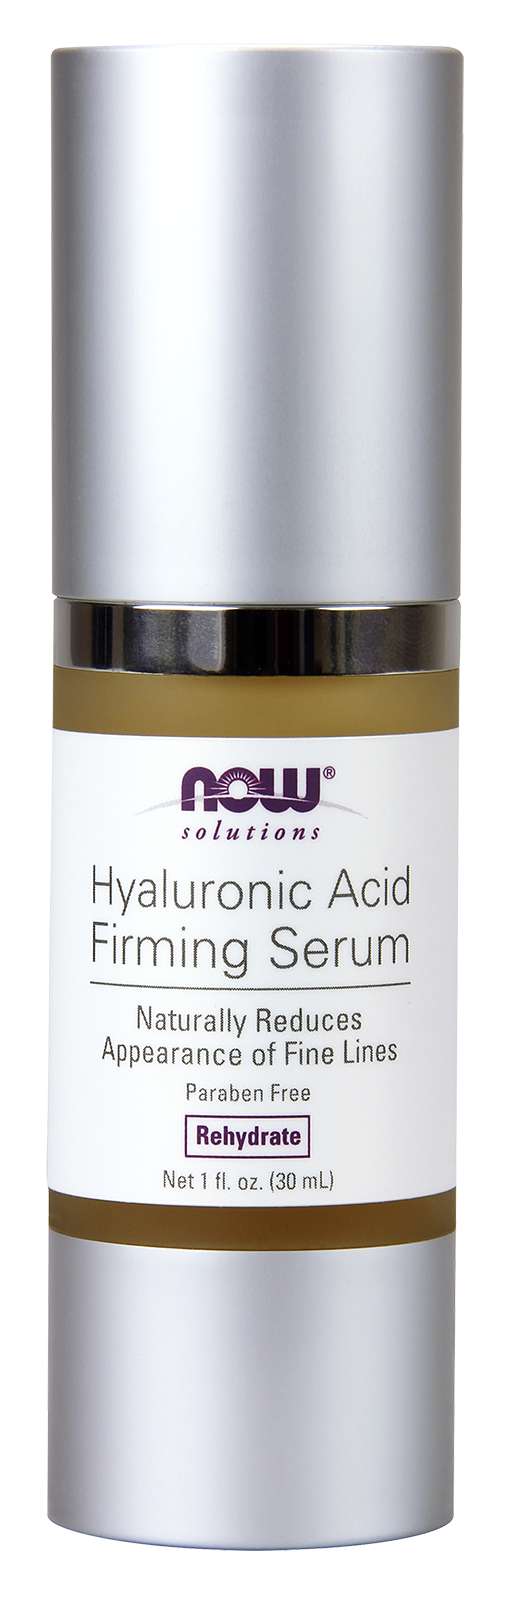 Hyaluronic Acid Firming Serum 30mL